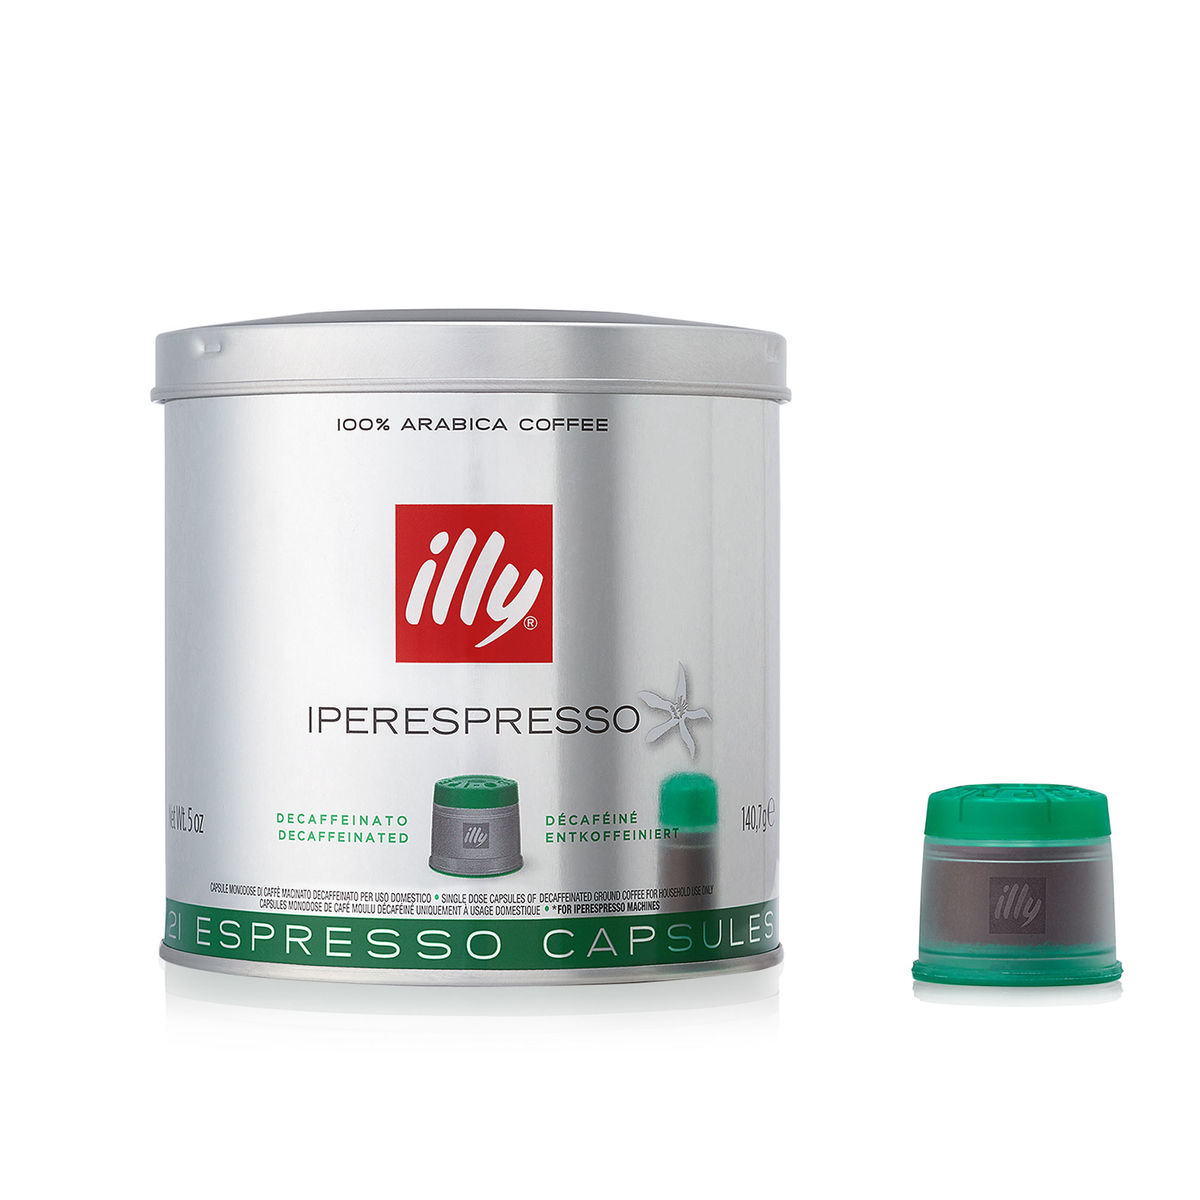 Decaffeinated iperEspresso Espresso Capsule Can Front View